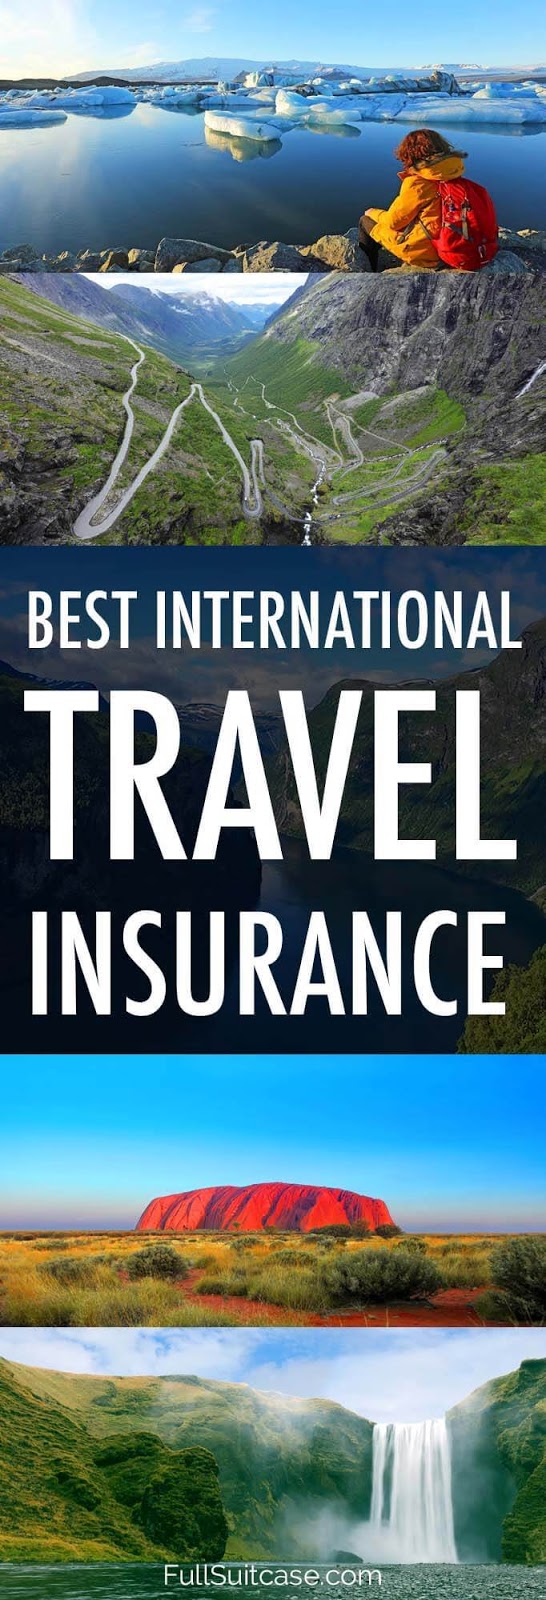 worldwide travel insurance money saving expert